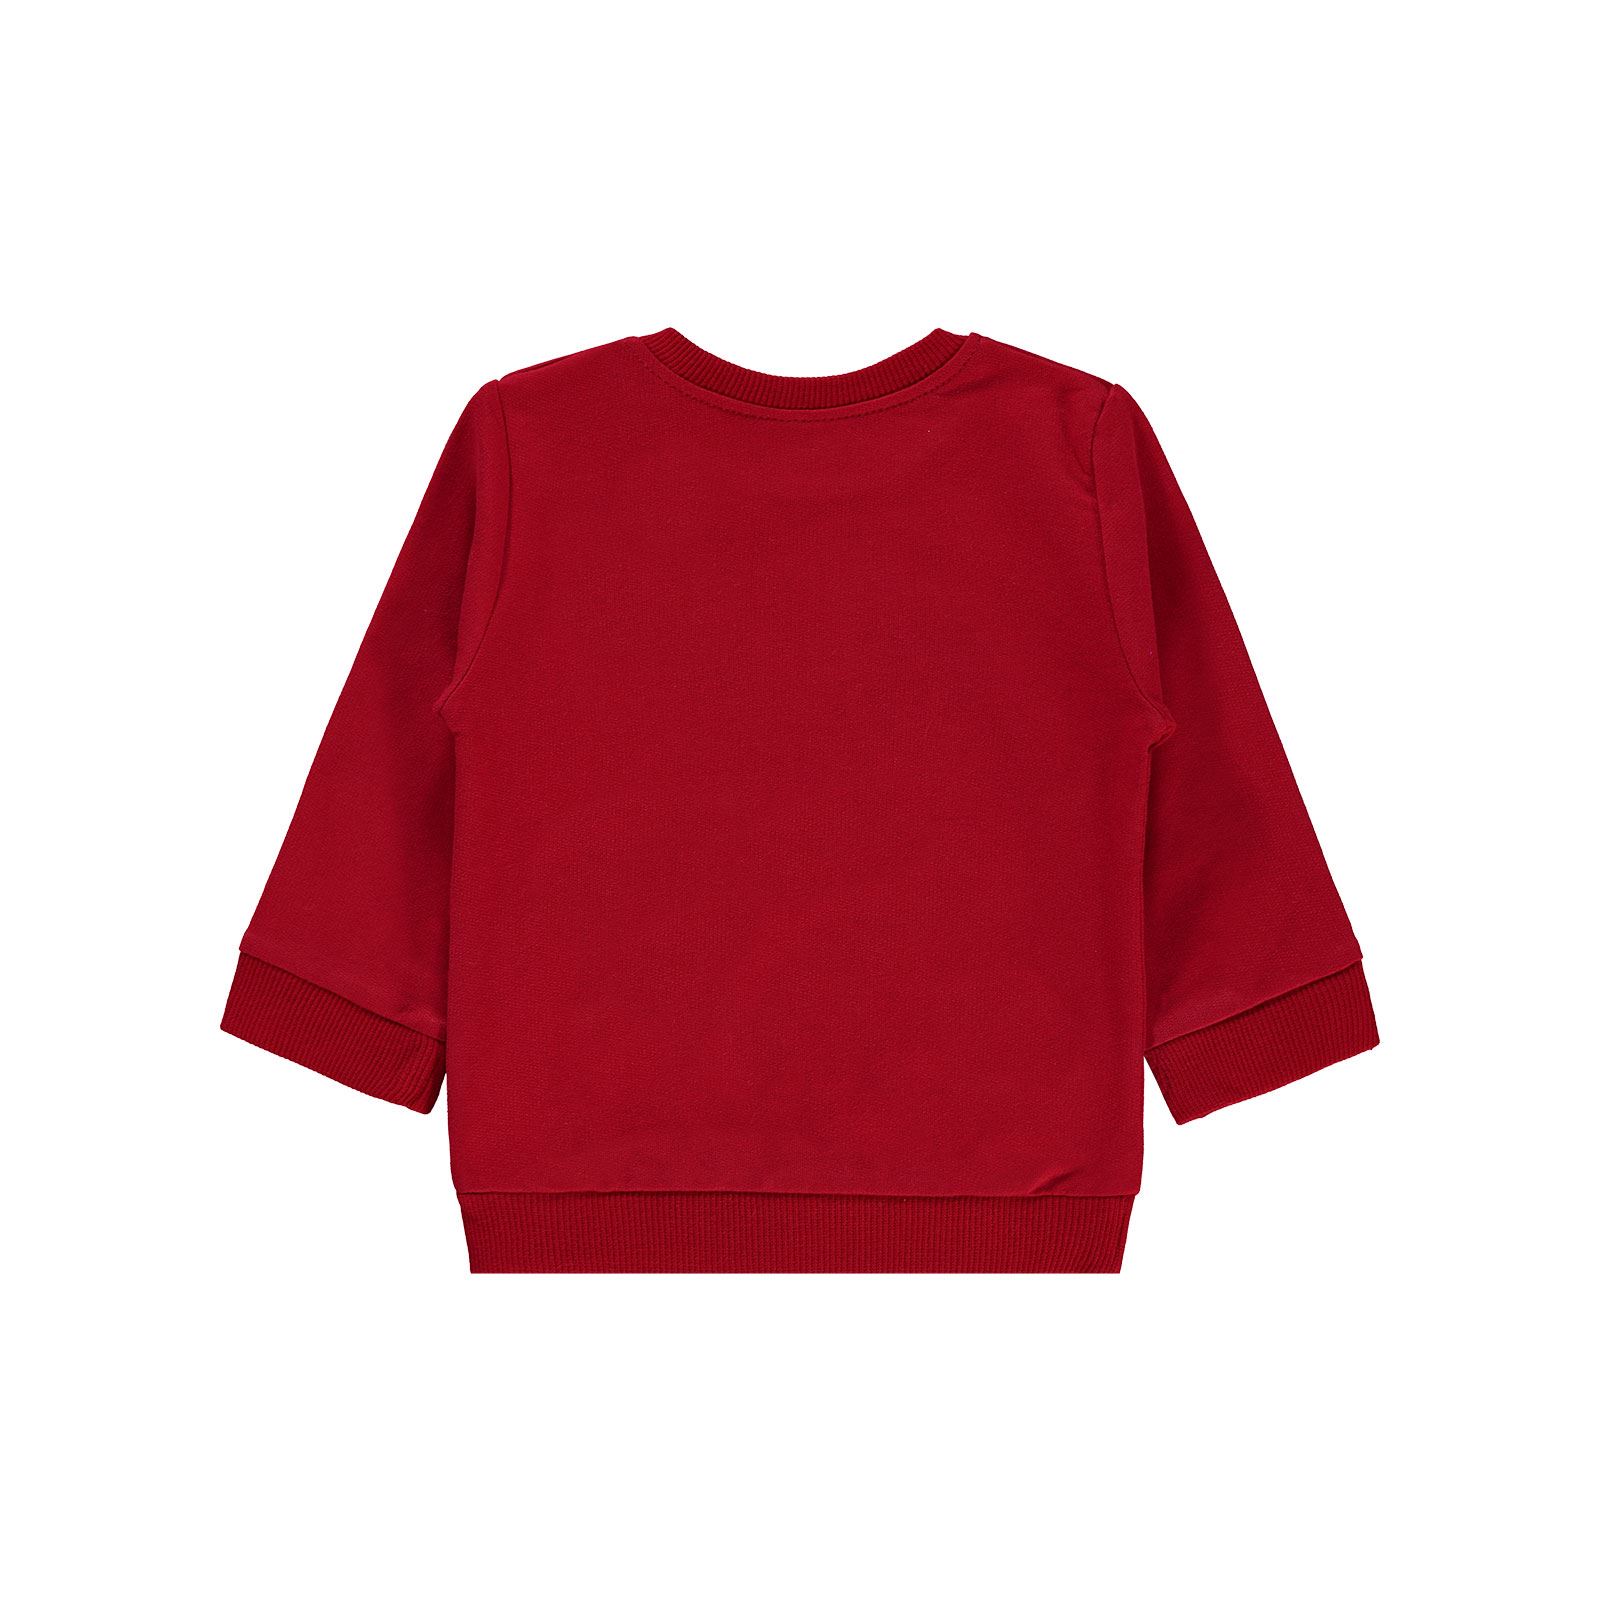 Tuffy Erkek Bebek Sweatshirt 6-24 Ay Kırmızı